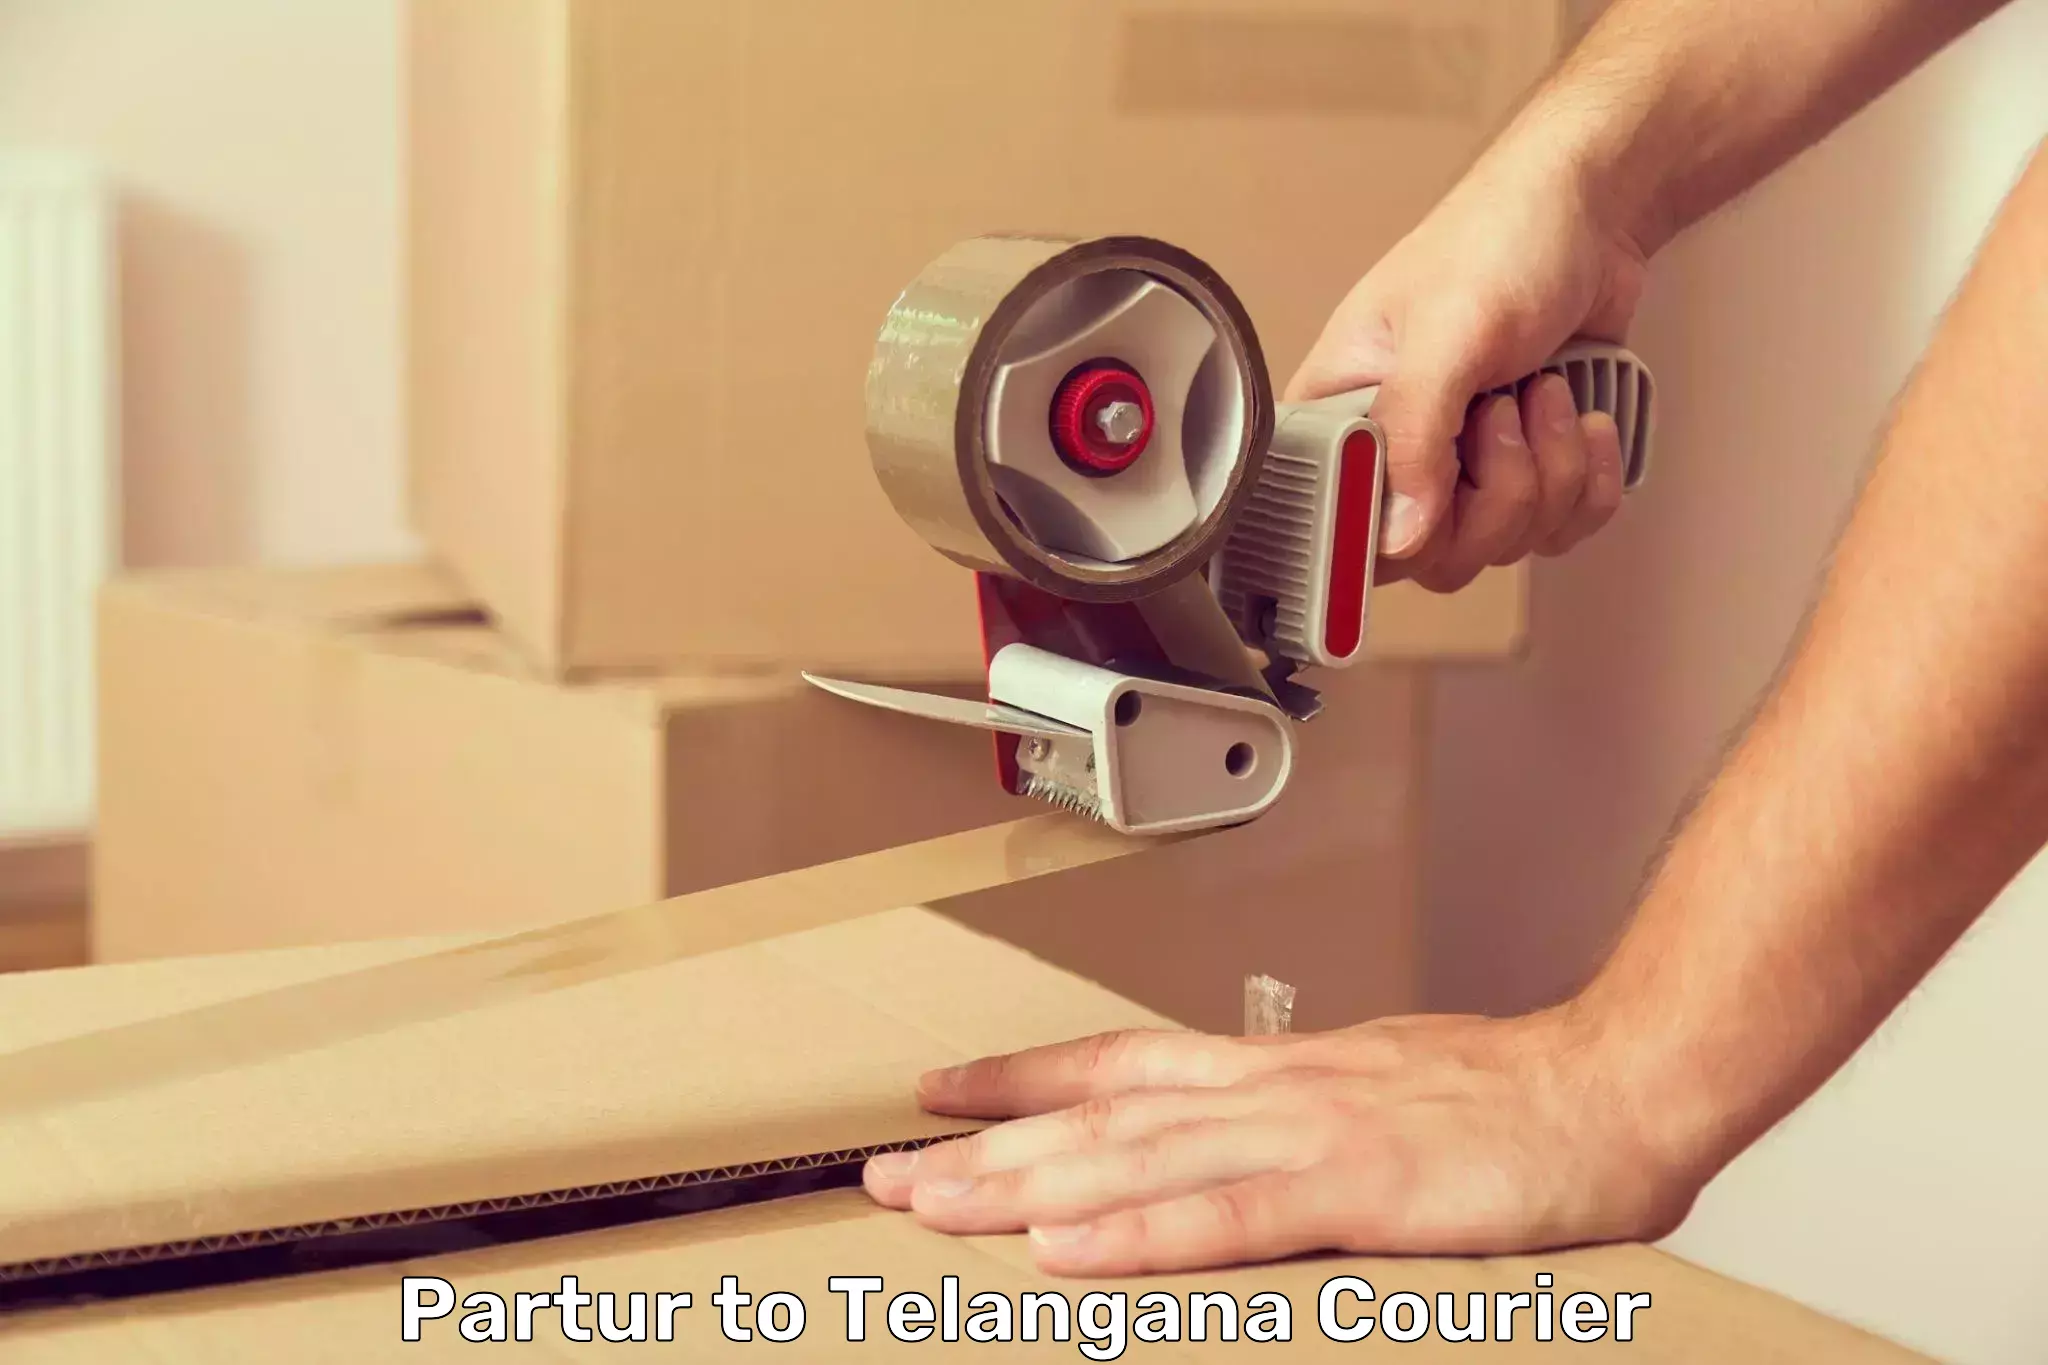 Courier service partnerships Partur to Telangana